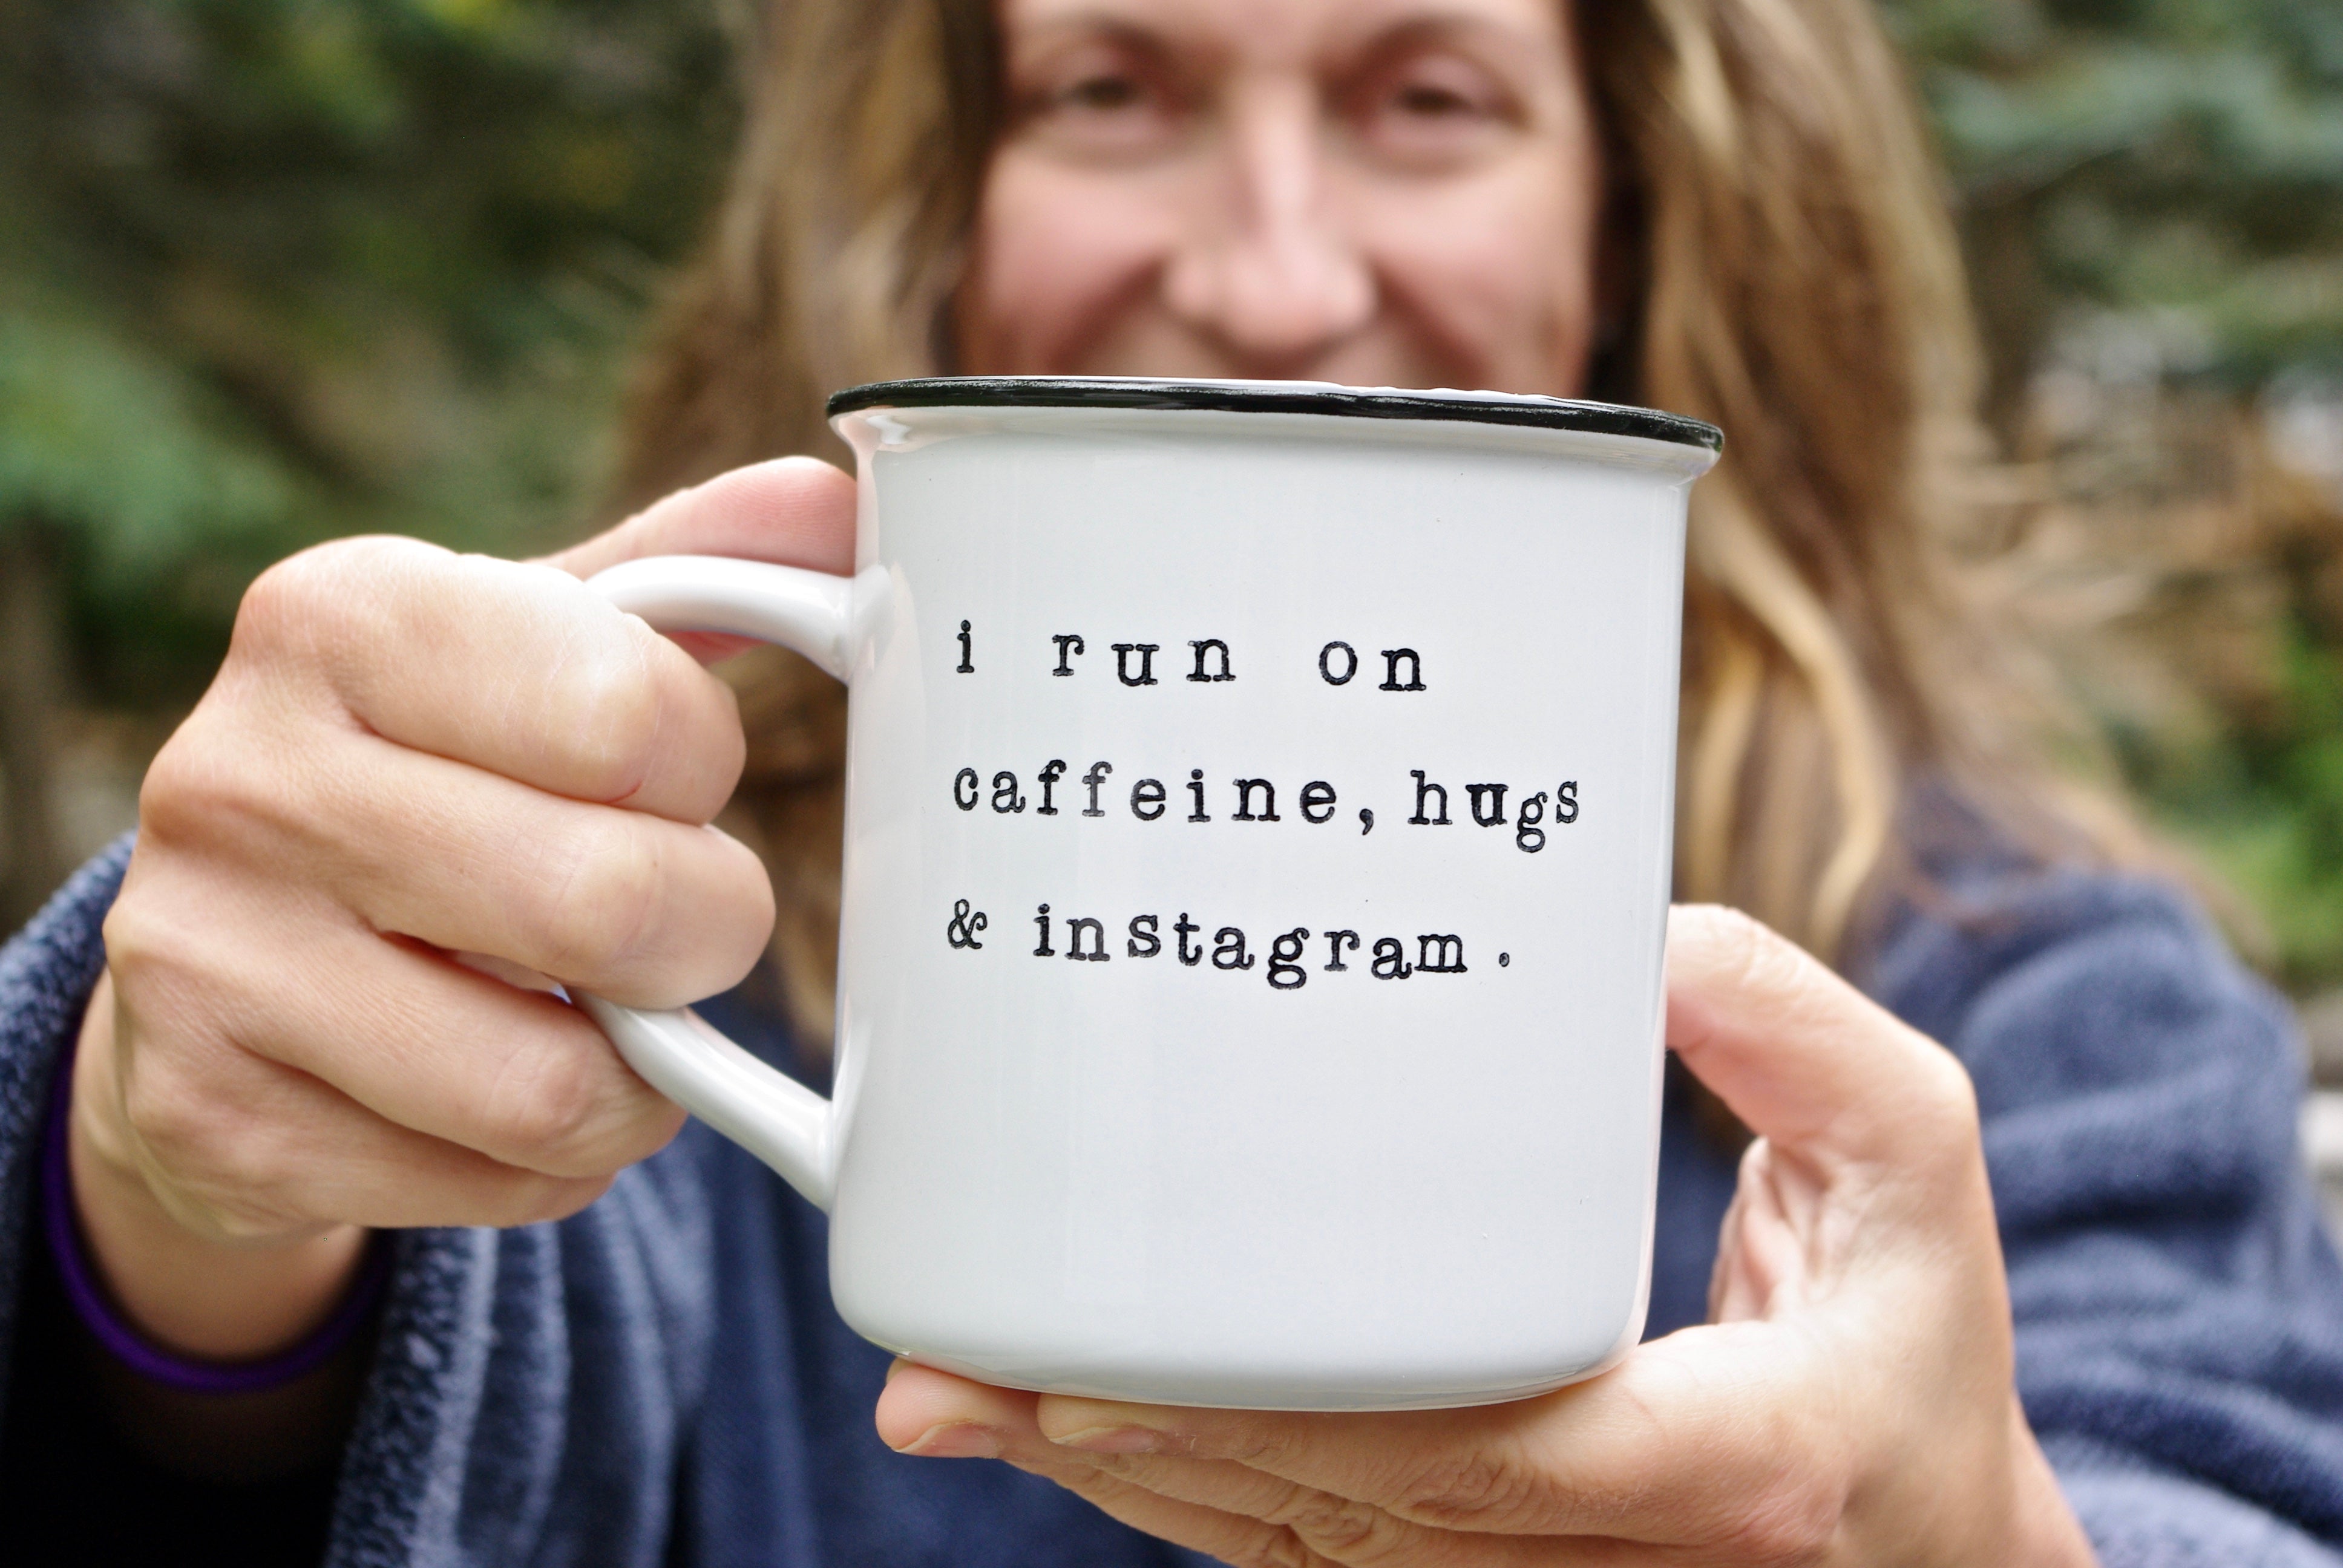 instagram lover gifts i run on caffeine mug